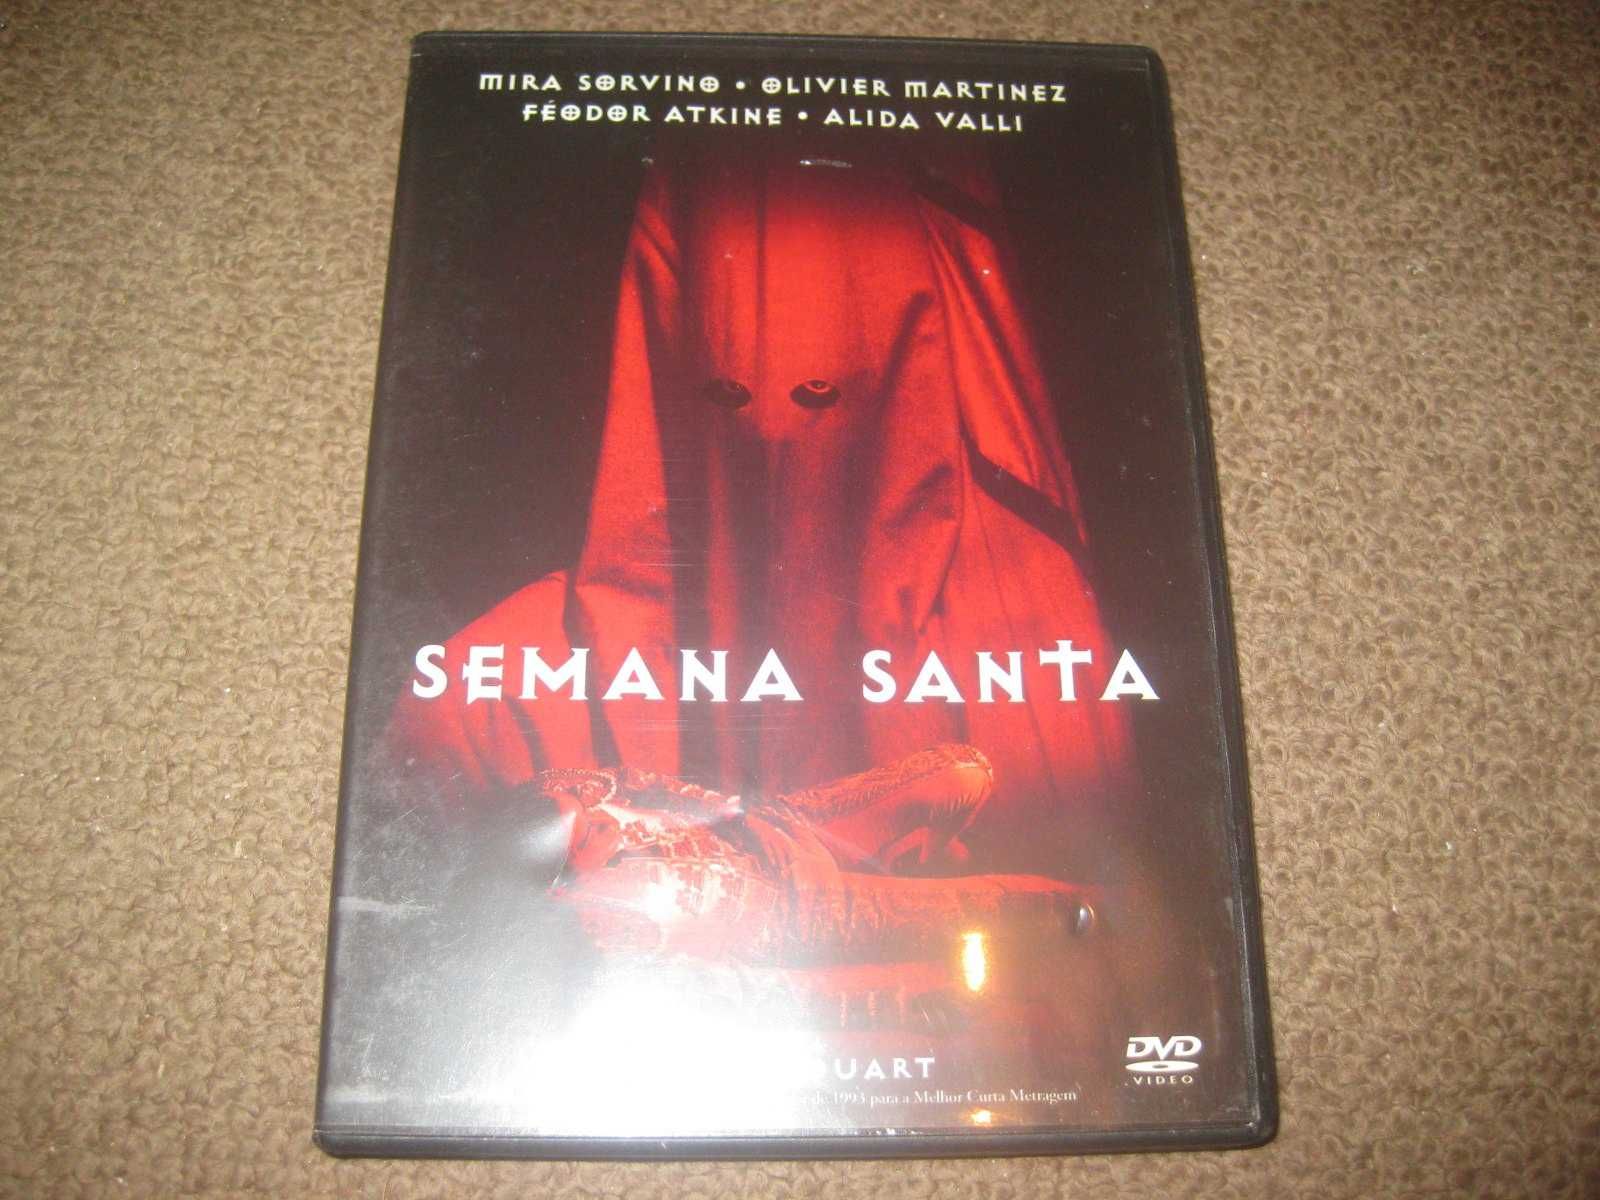 DVD "Semana Santa" com Mira Sorvino/Raro!